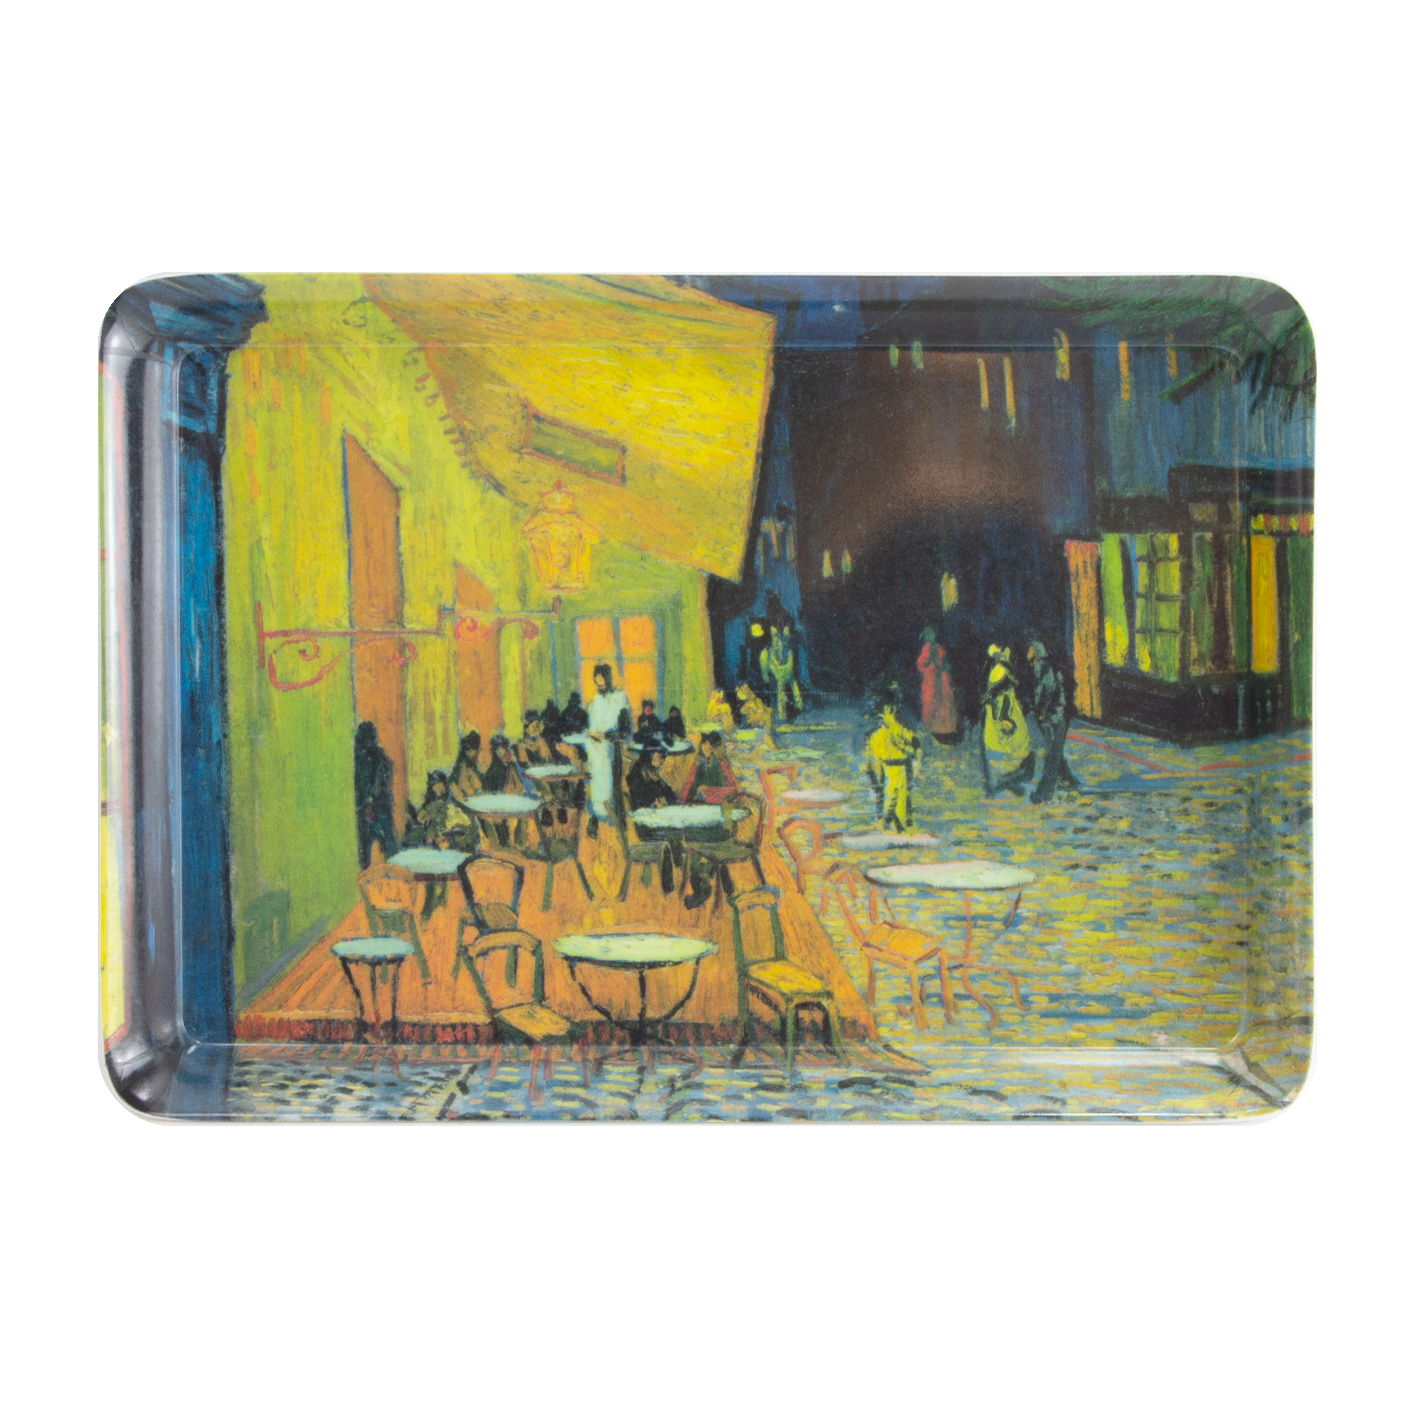 Serving Tray, Mini Size, Café terrace by night, Van Gogh